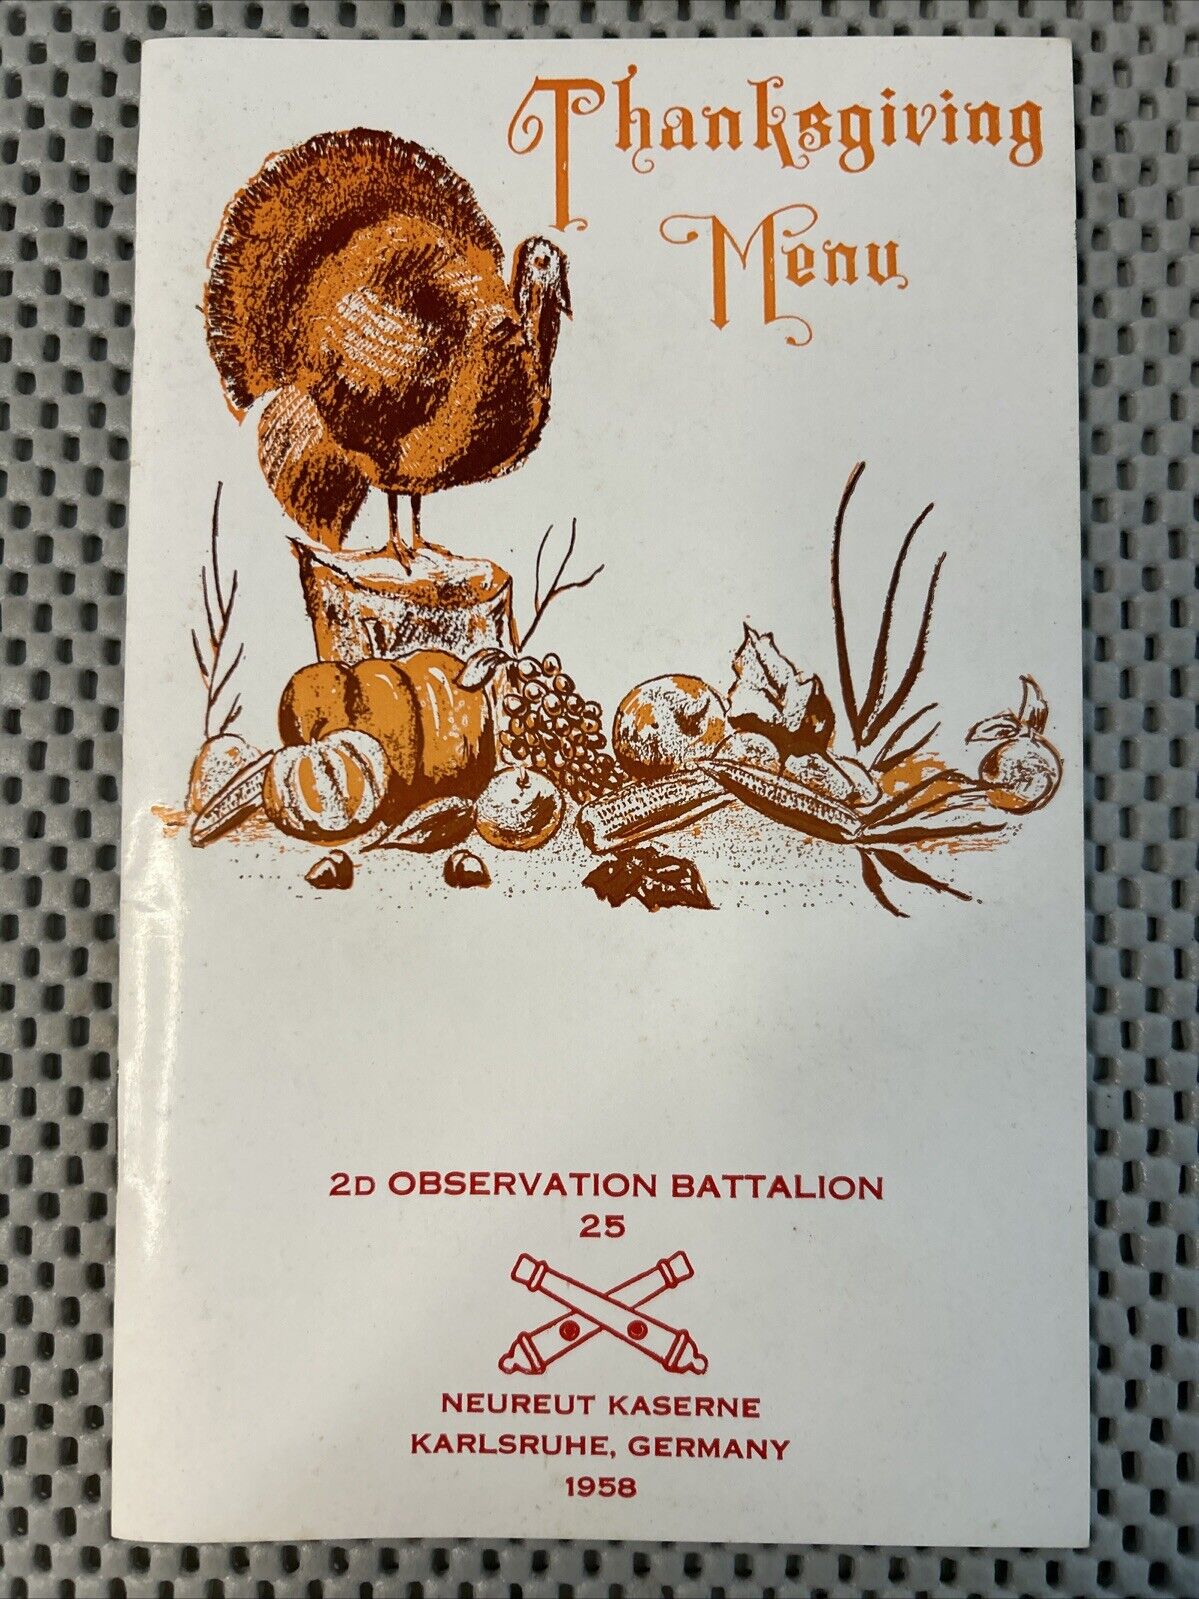 Vtg 1958 Karlsruhe Germany Thanksgiving Day Menu Army 2D Observation Battalion